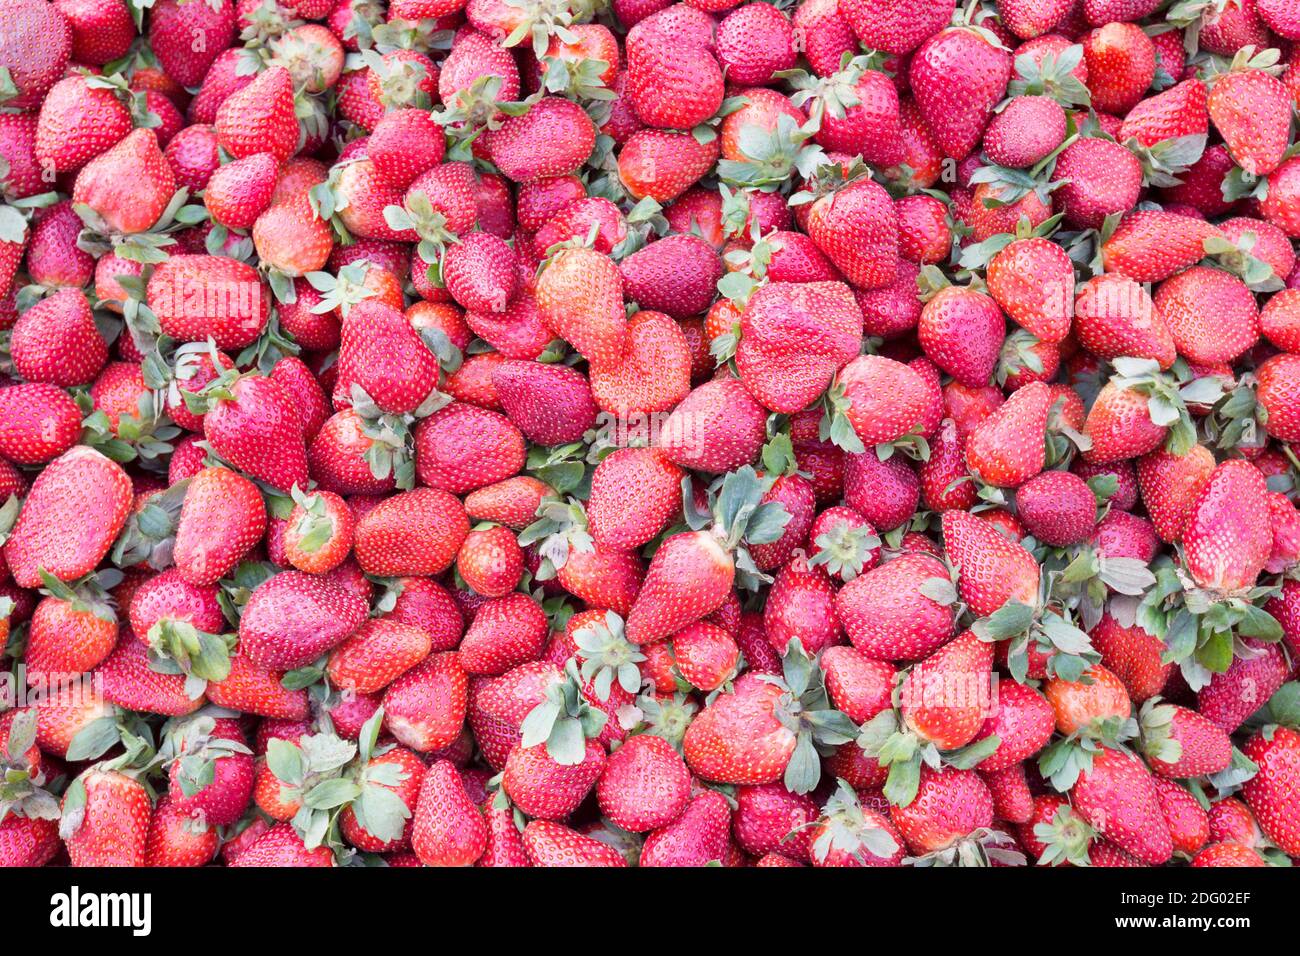 Pile of strawberries Stock Photo